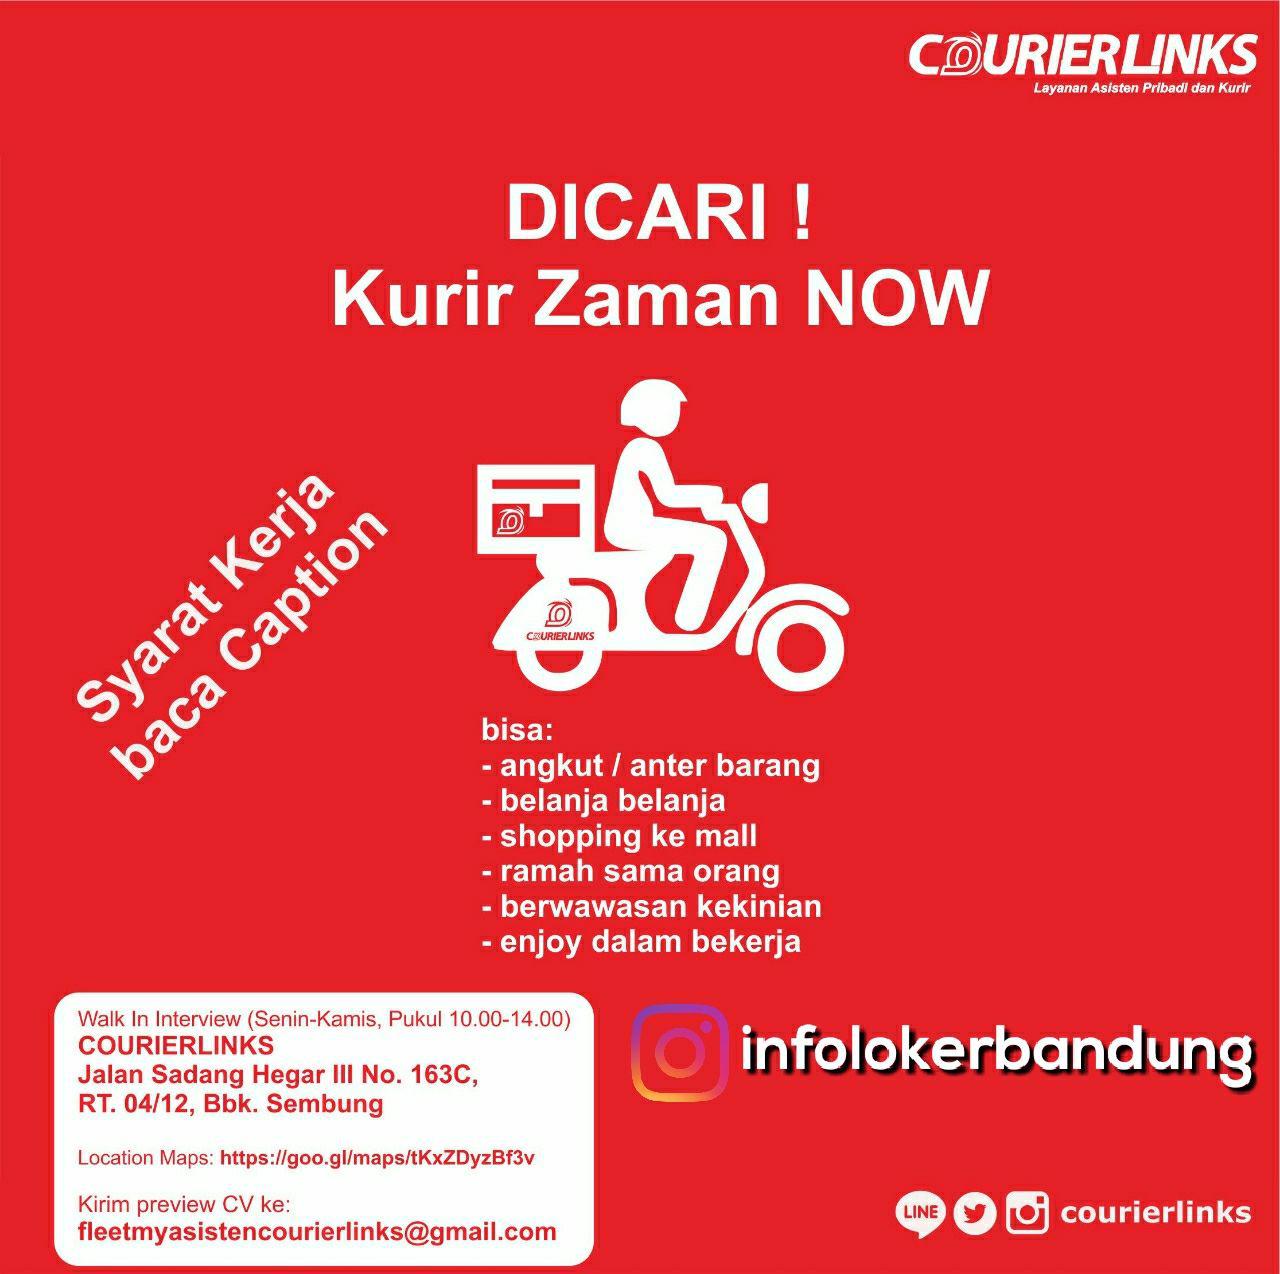 Lowongan Kerja Courier Links Bandung Desember 2017 - Info 